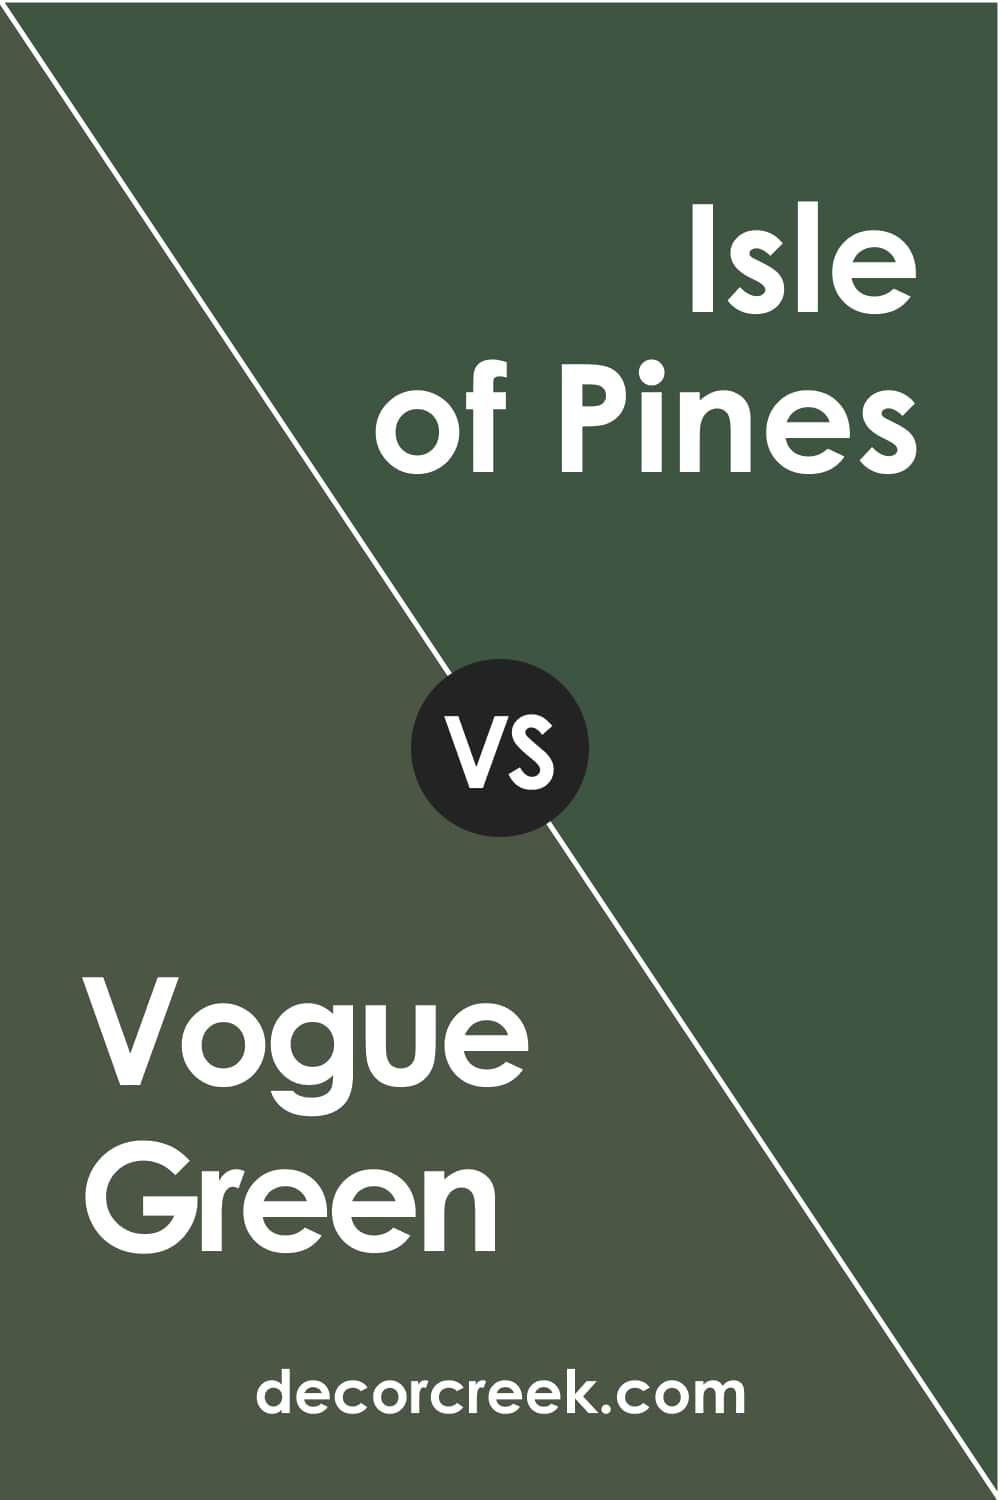 Vogue Green vs Isle of Pines